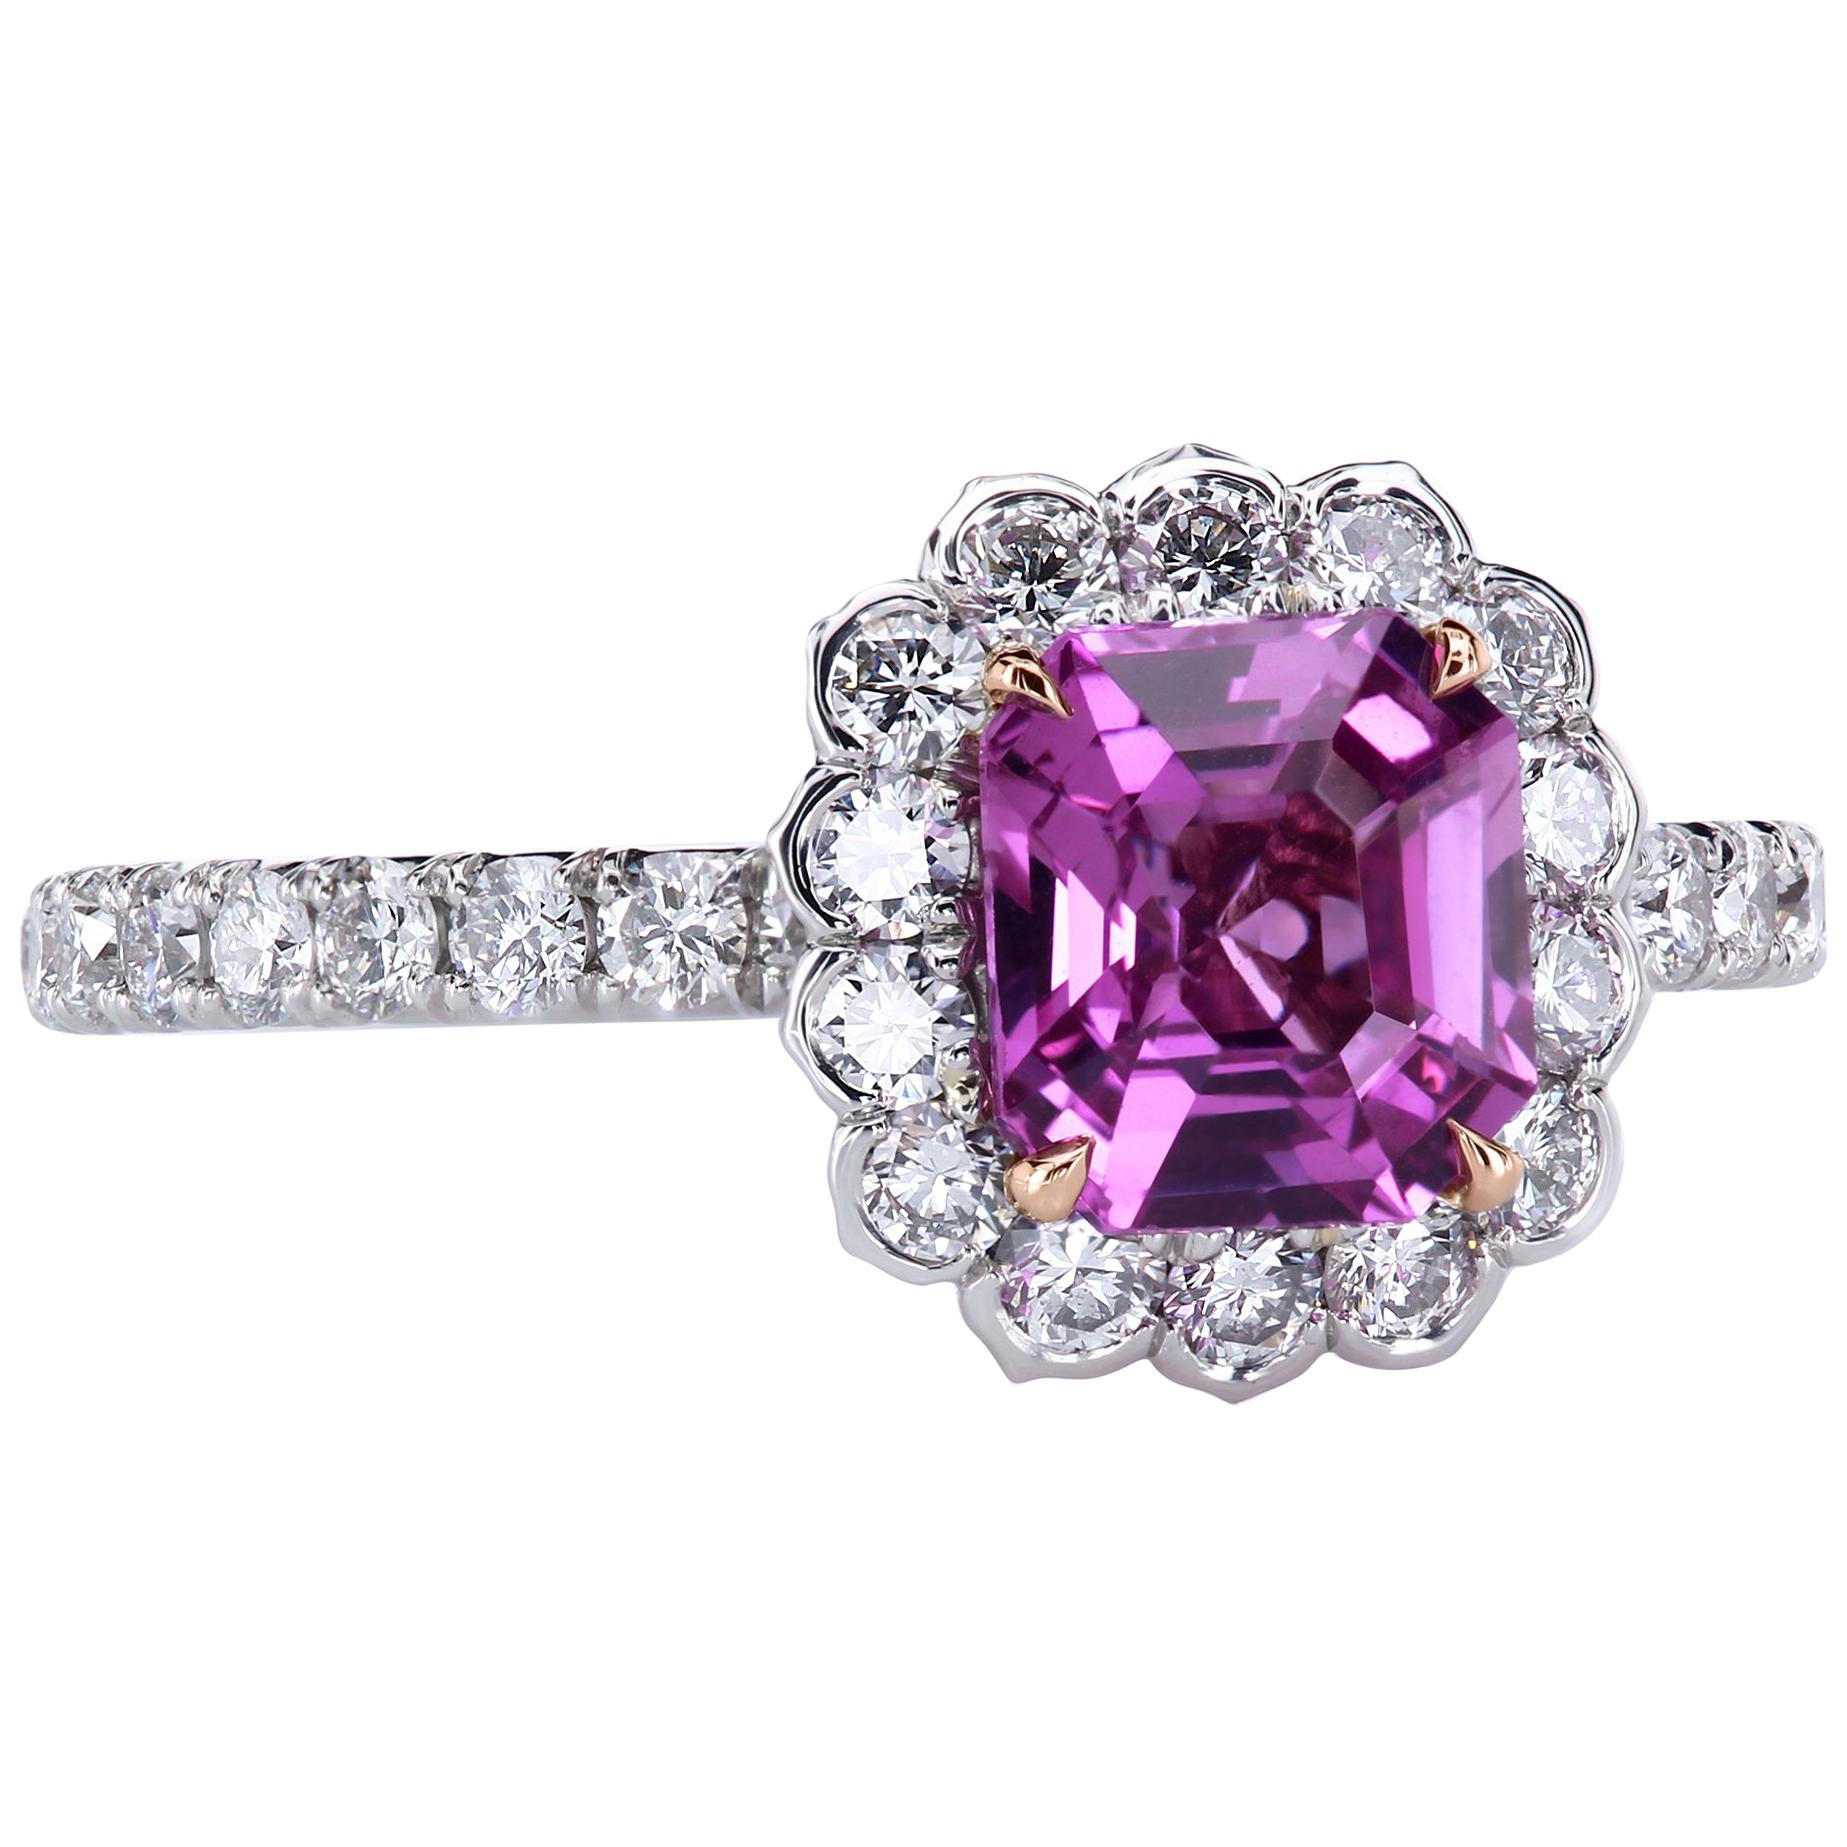 Natural Pink Sapphire in a Bespoke "Lotus" Diamond Platinum Engagement Ring